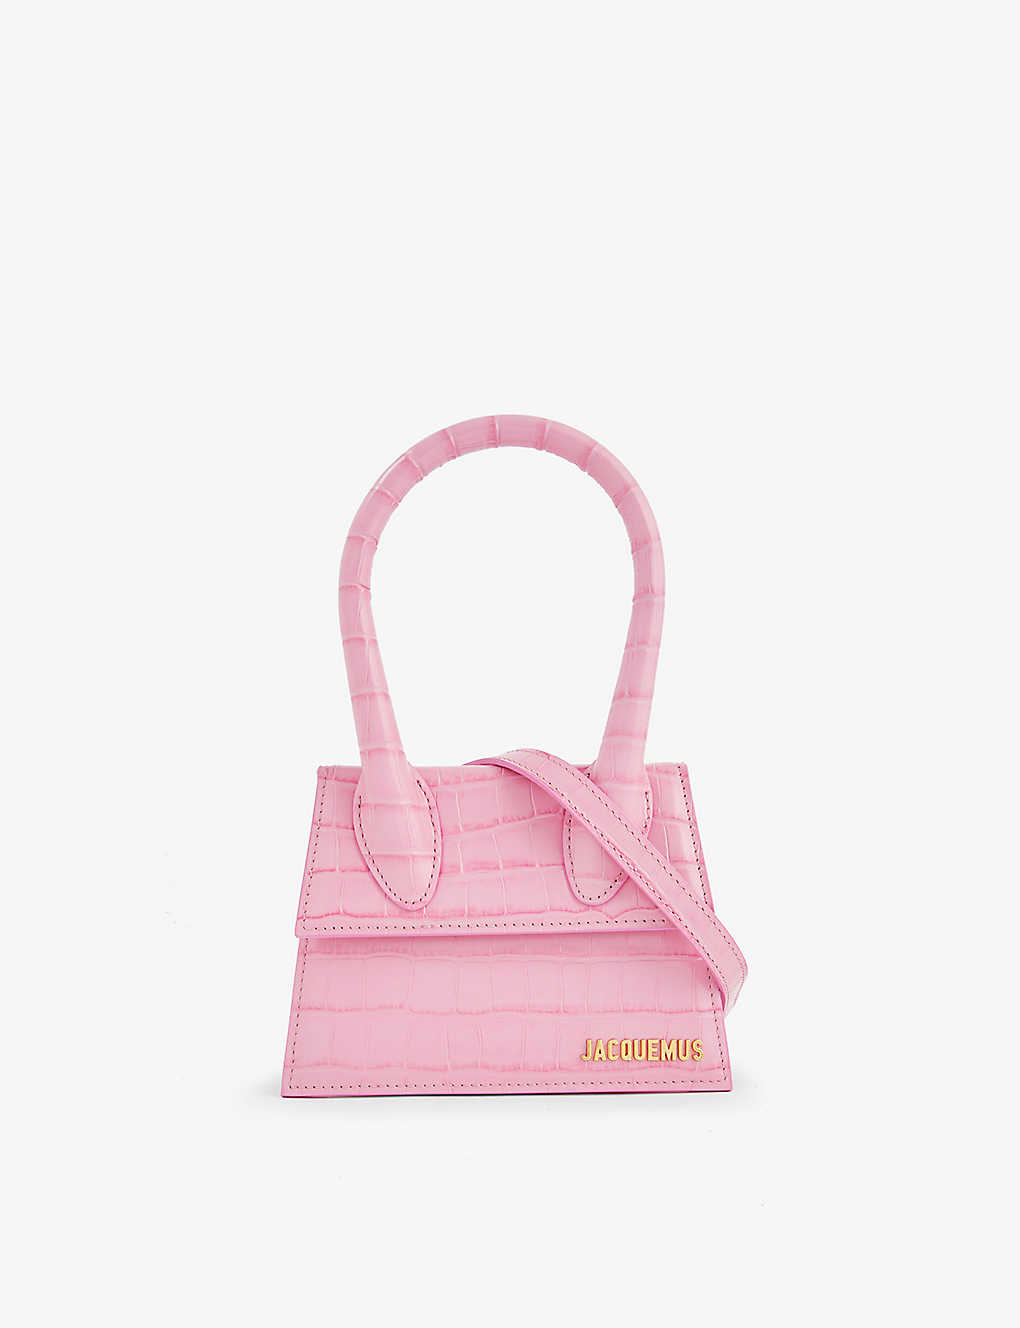 Jacquemus Pink Le Chiquito Medium Leather Top Handle Bag